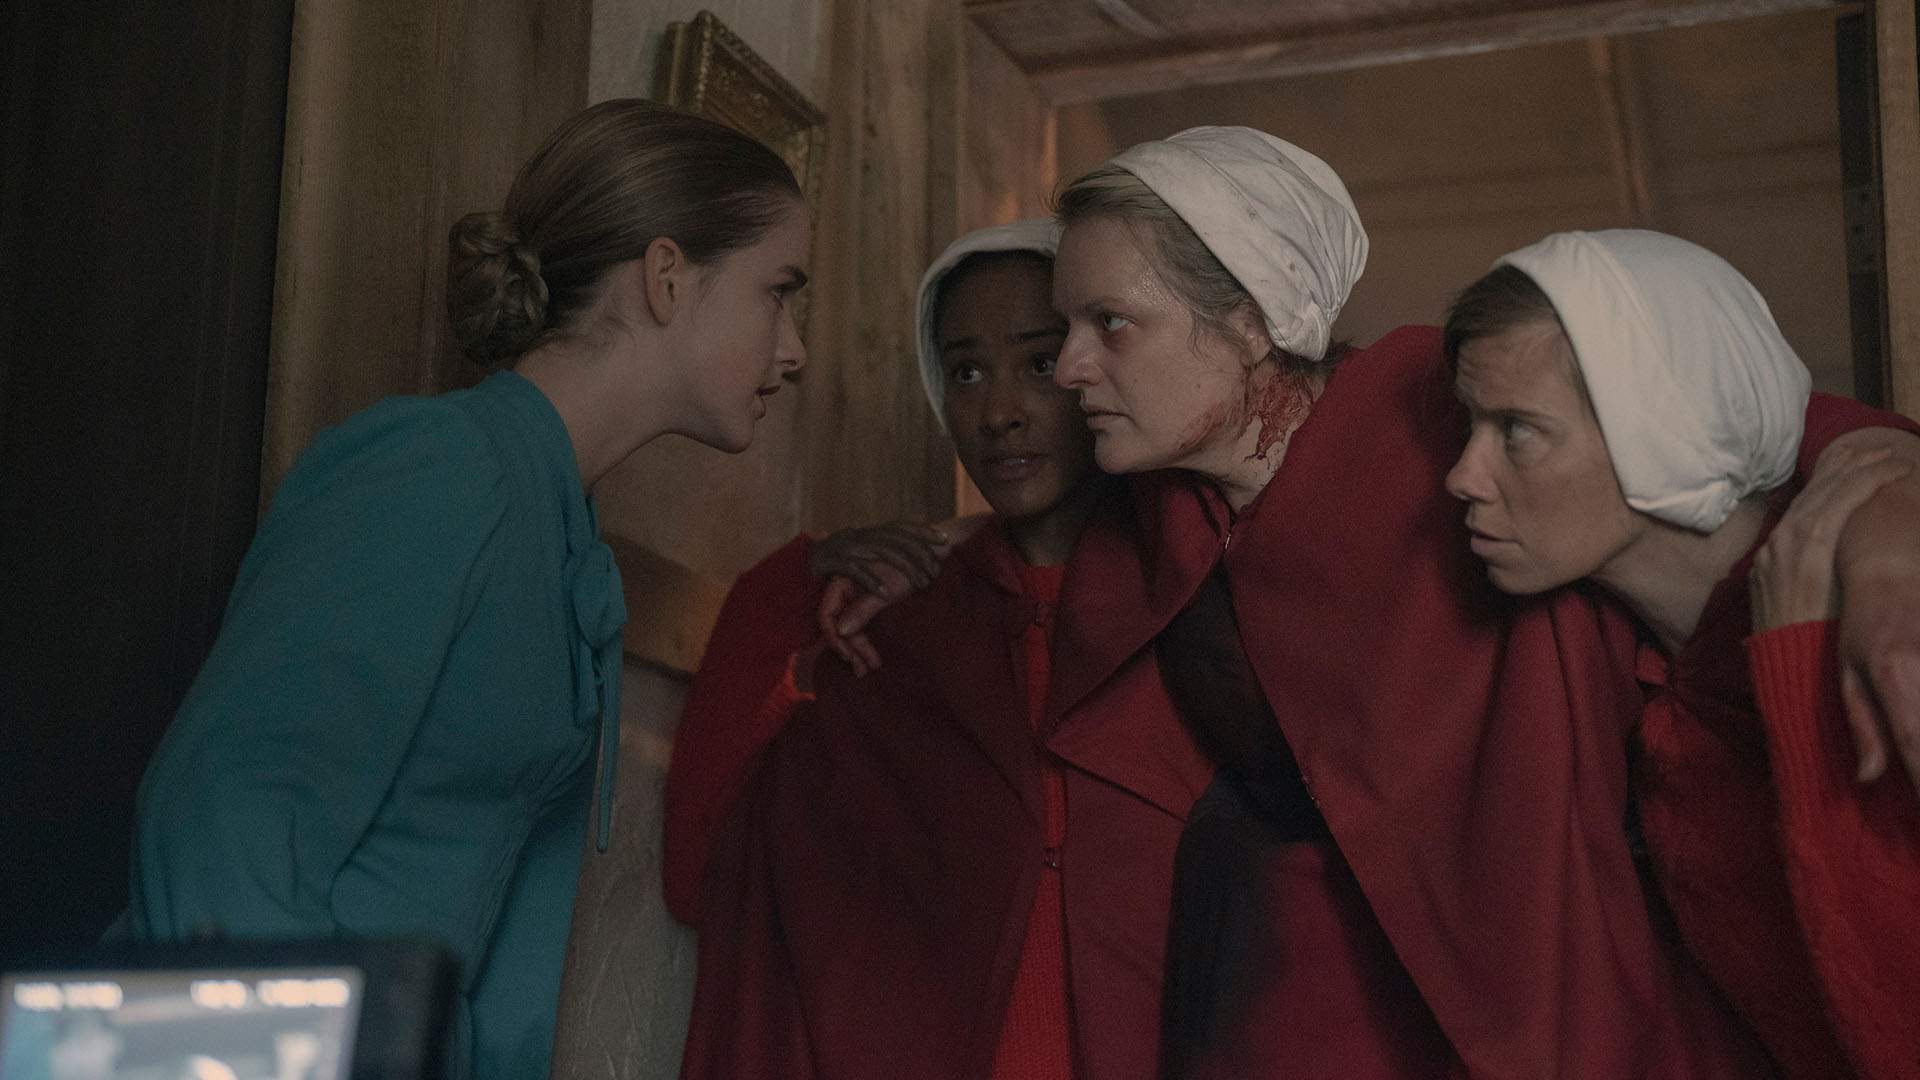 The Long-Awaited Fourth Season of 'The Handmaid's Tale' Finally Arrives This Week